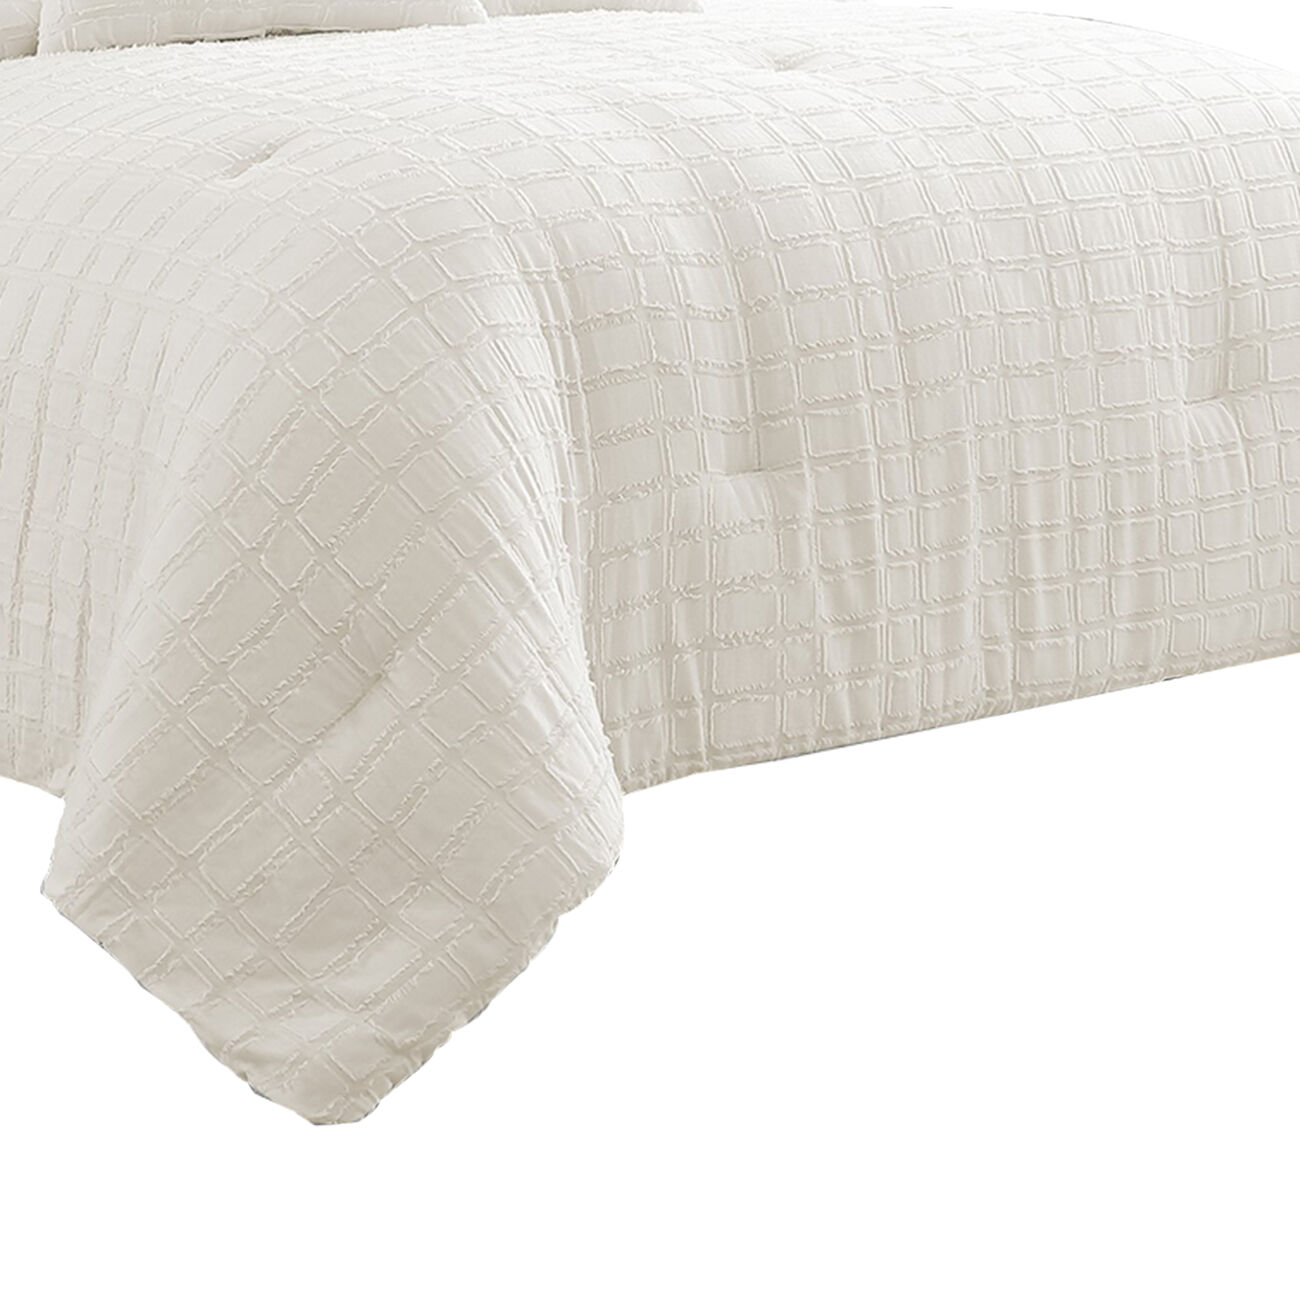 7 Piece Cotton Queen Comforter Set with Fringe Details, White